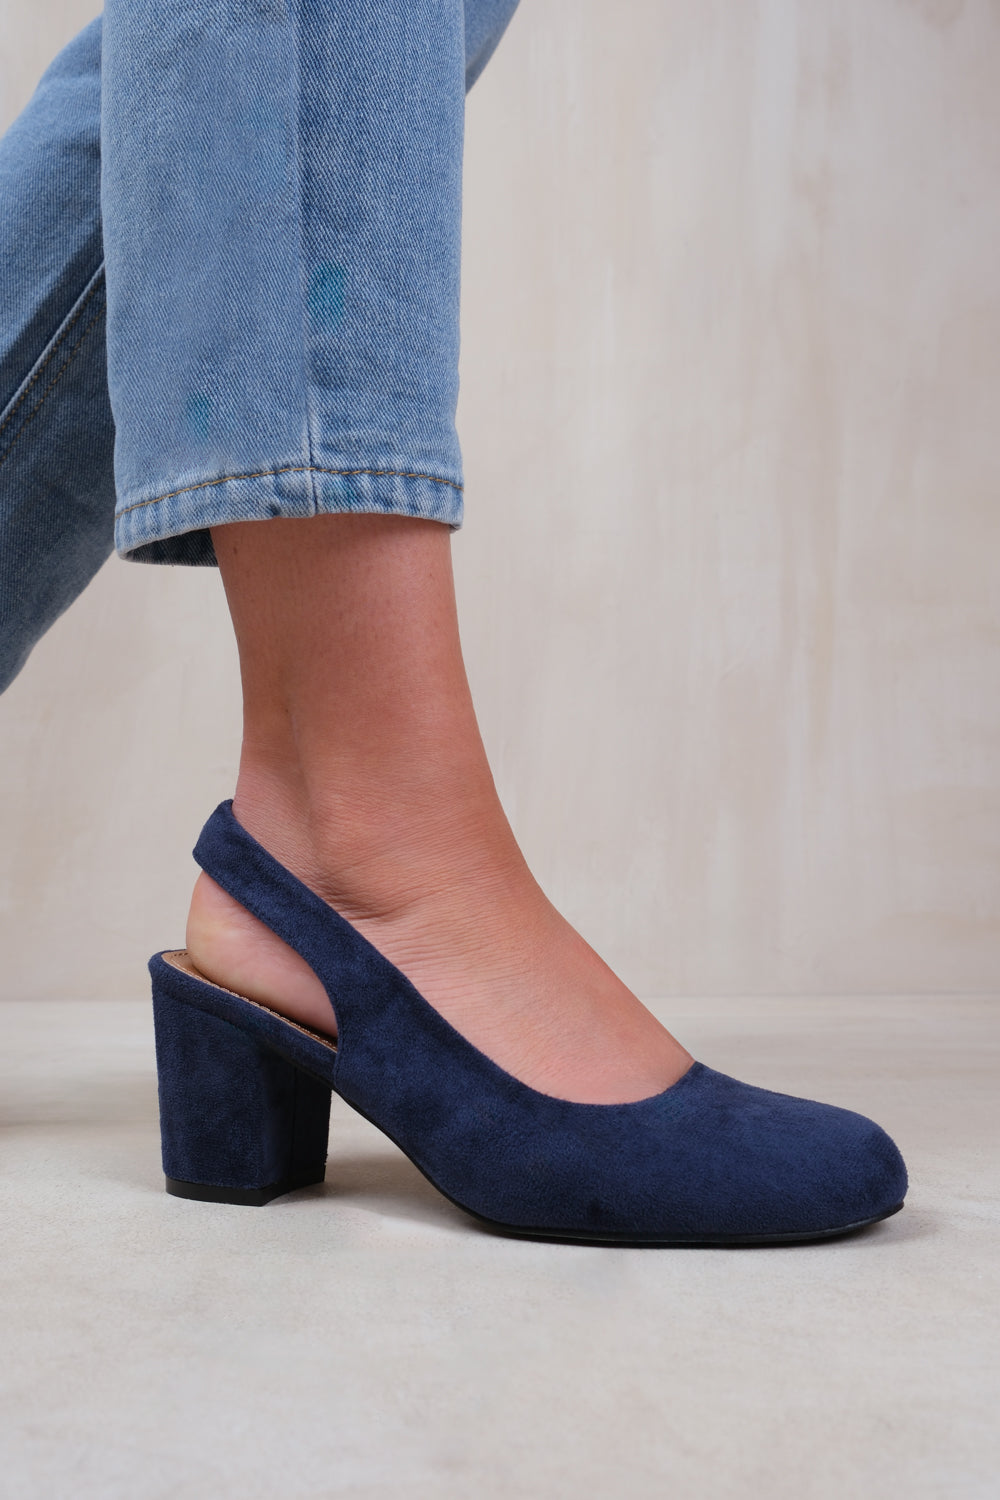 Extra Wide Women's Heels | Dillard's